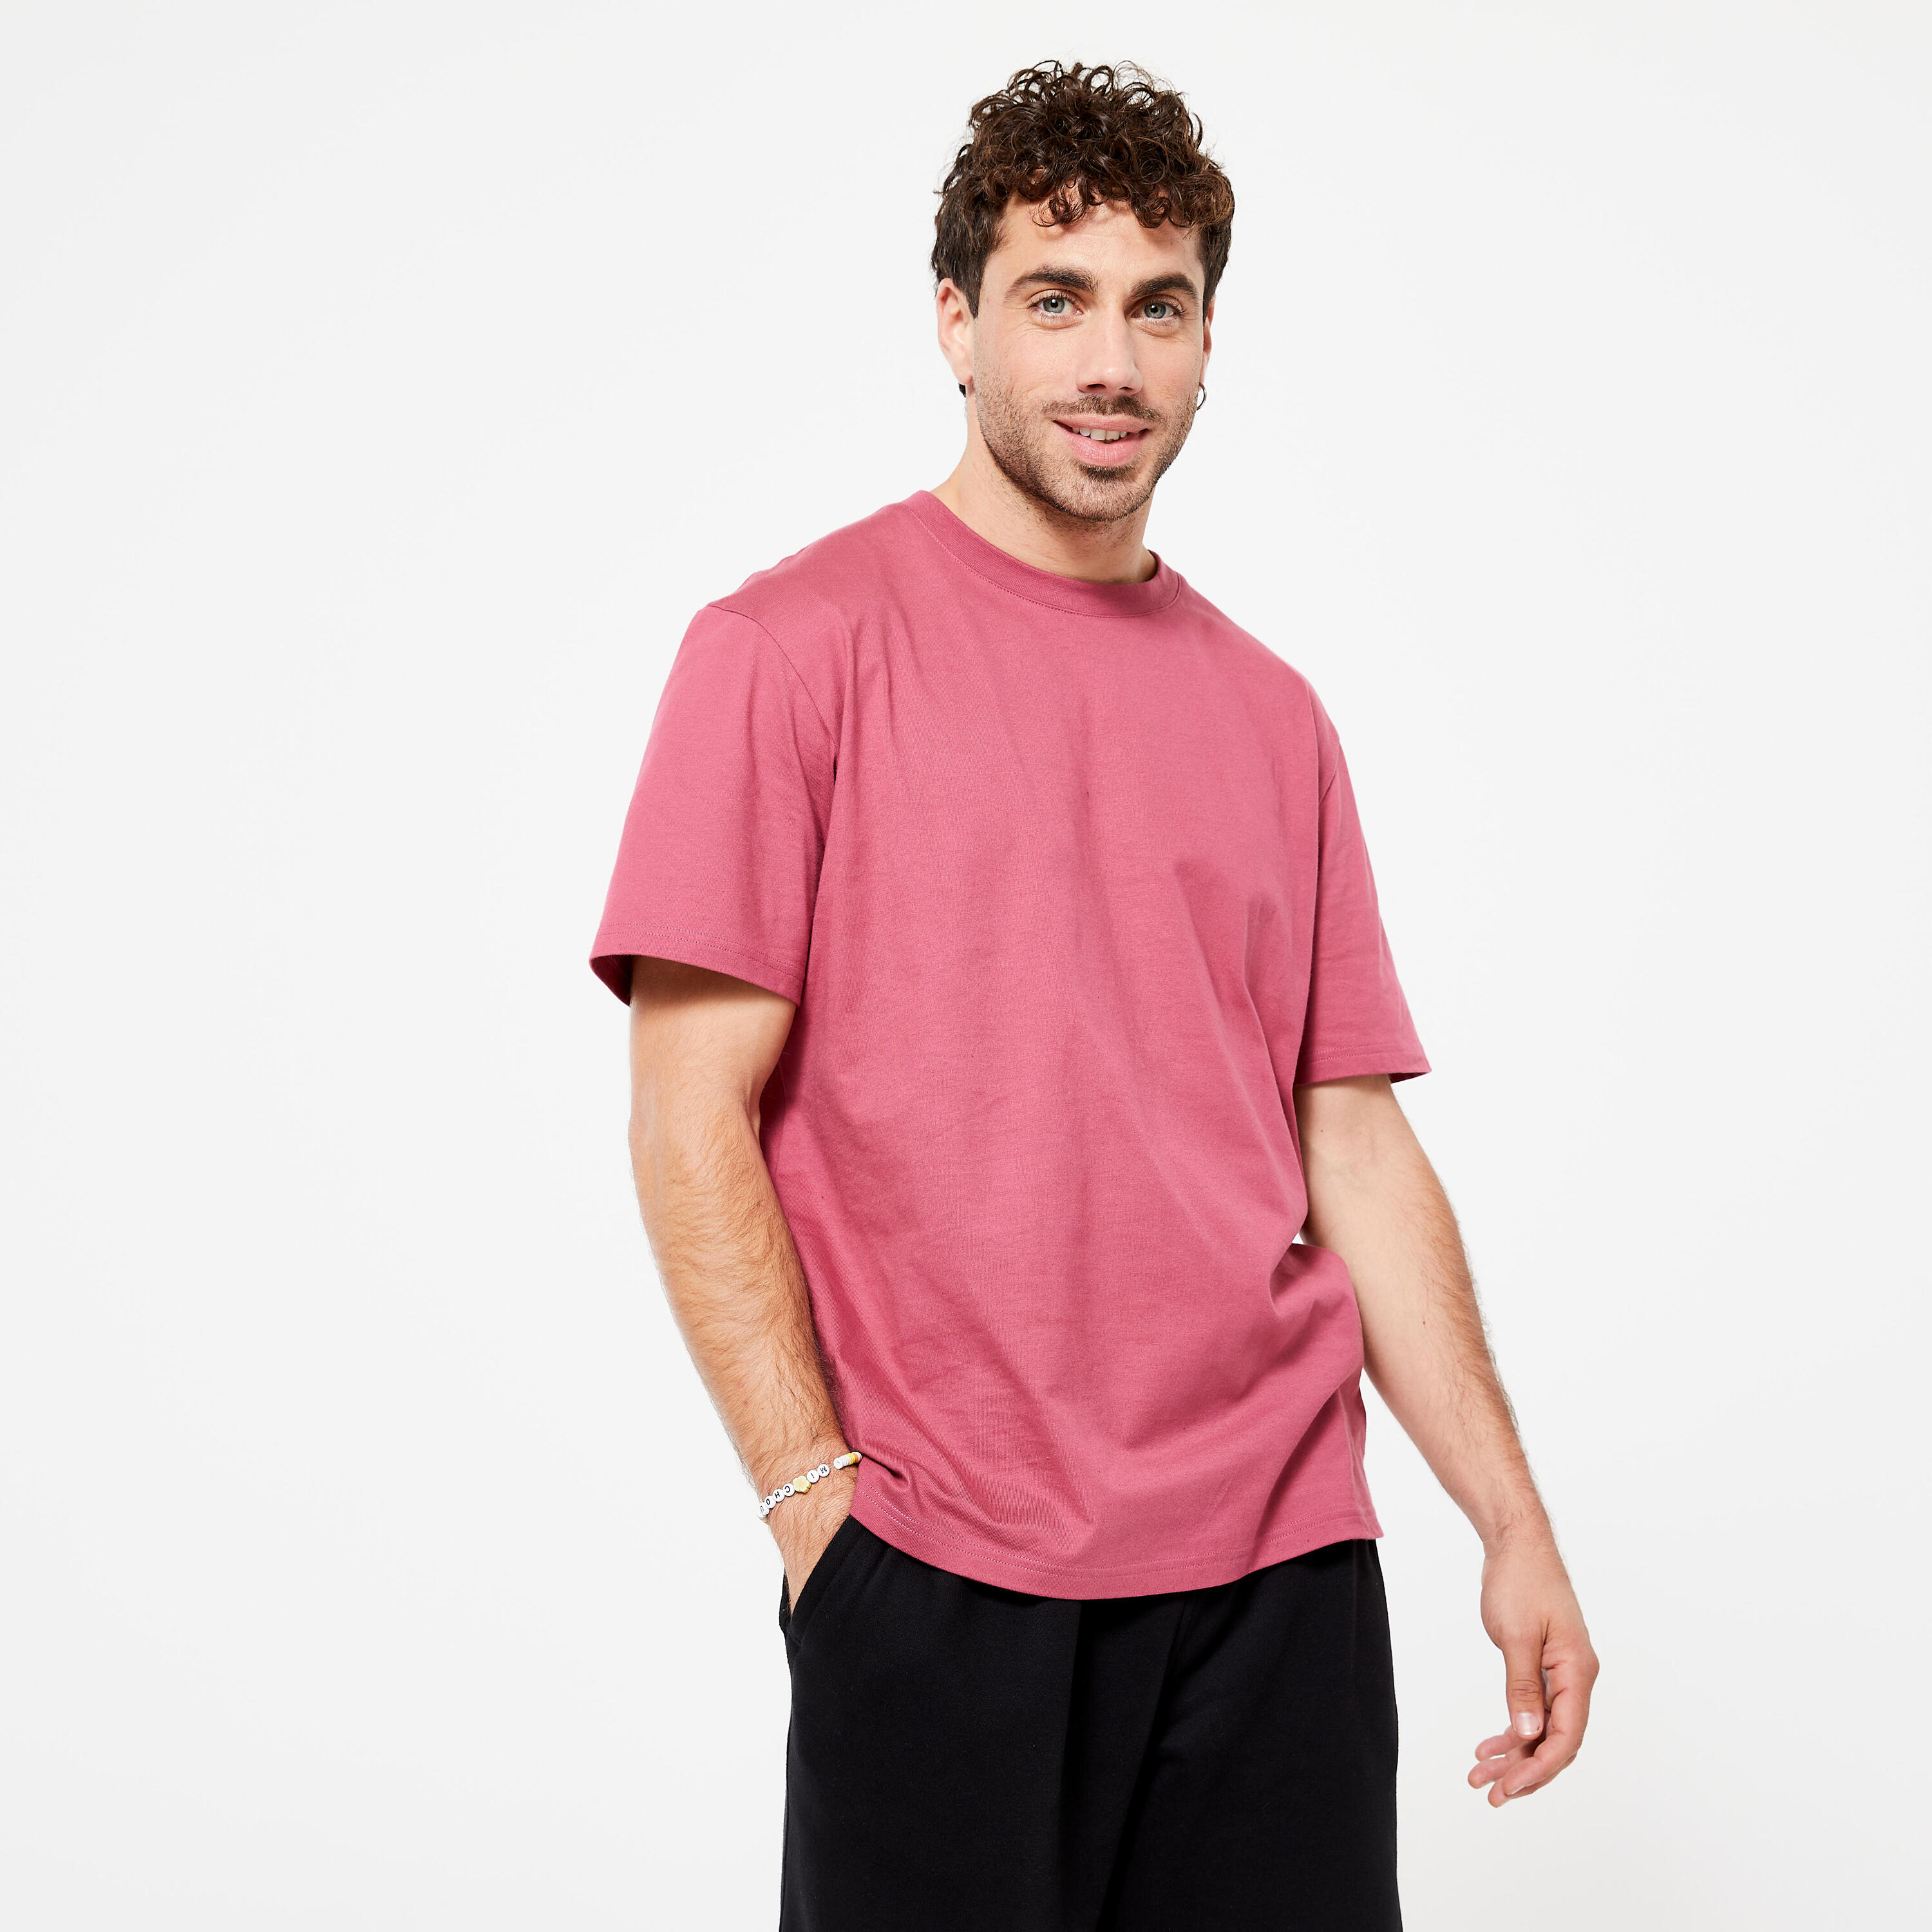 DOMYOS Men's Fitness T-Shirt 500 Essentials - Pink